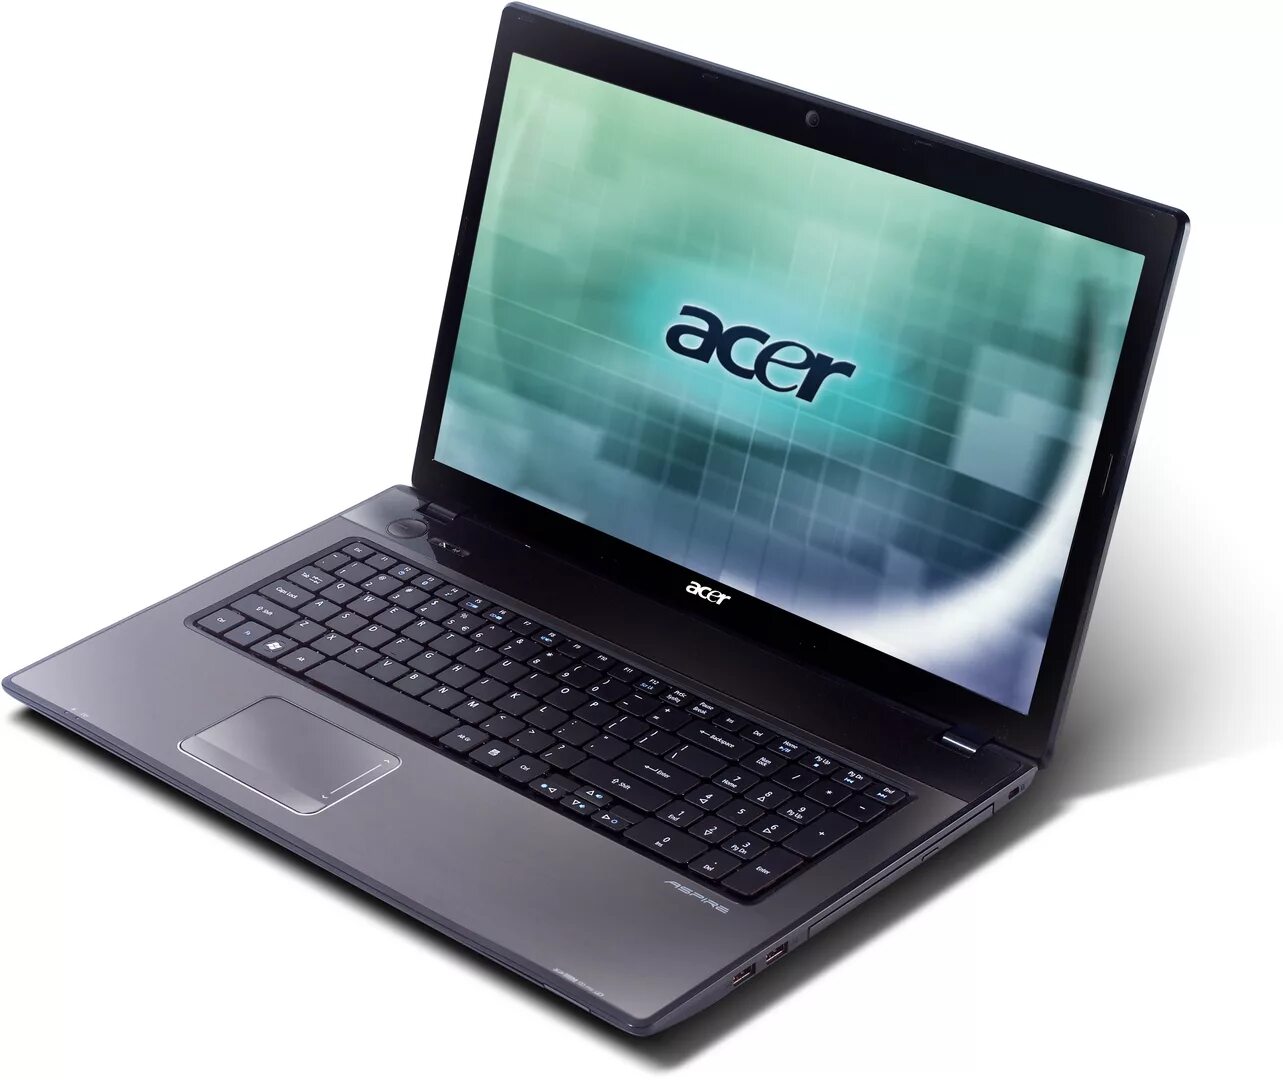 Acer Aspire 7741g. Ноутбук Acer Aspire 5750g. ASUS Aspire 5750g. Acer Aspire 5750g i5.